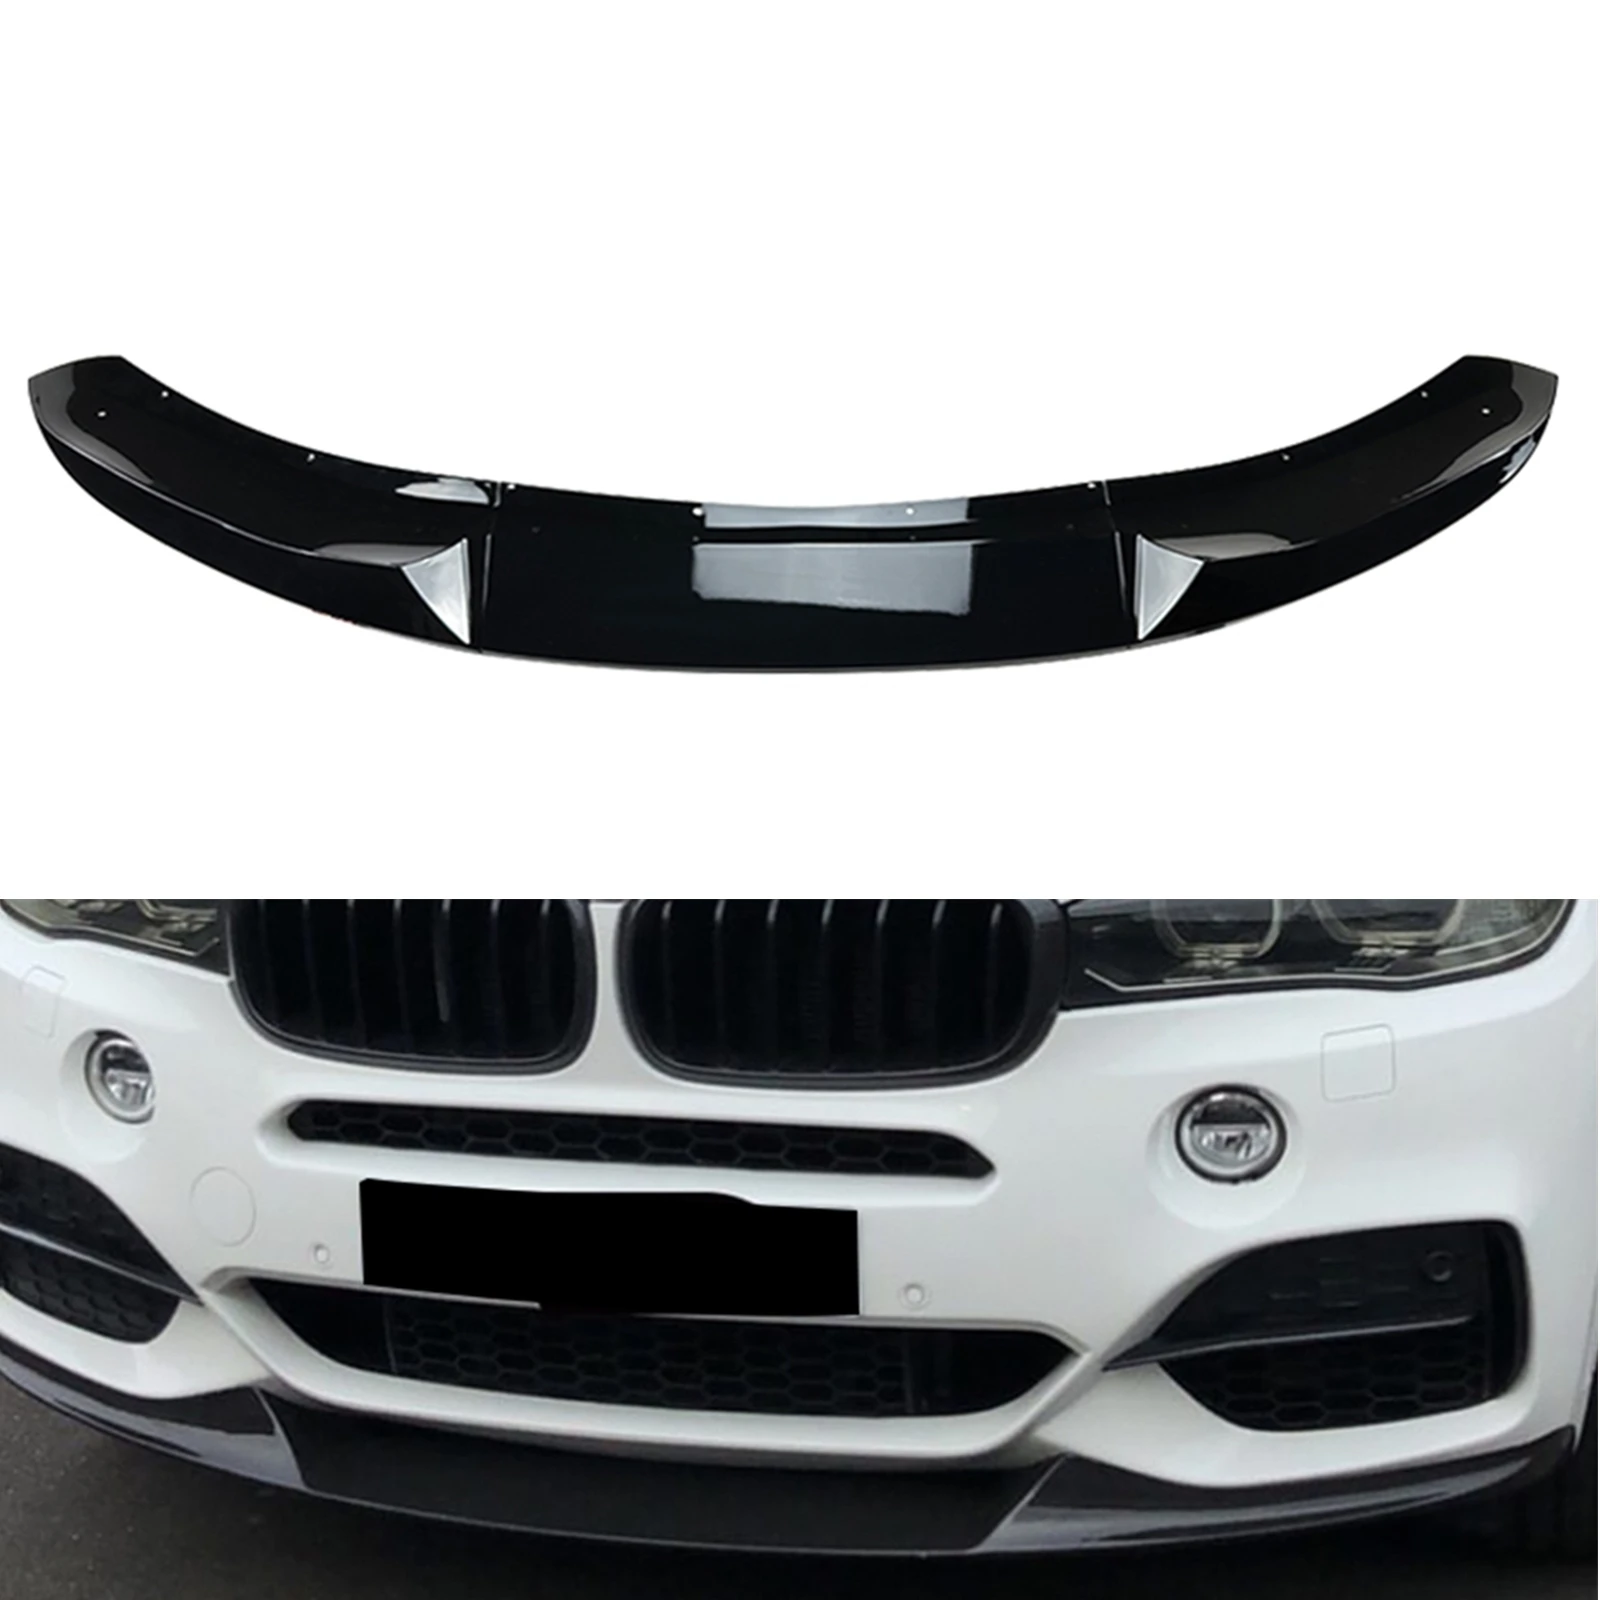 

Front Bumper Spoiler Lip For 2014 2015 2016 2017 2018 BMW X5 F15 M Sport Car Lower Splitter Blade Glossy Black Guard Plate Kit